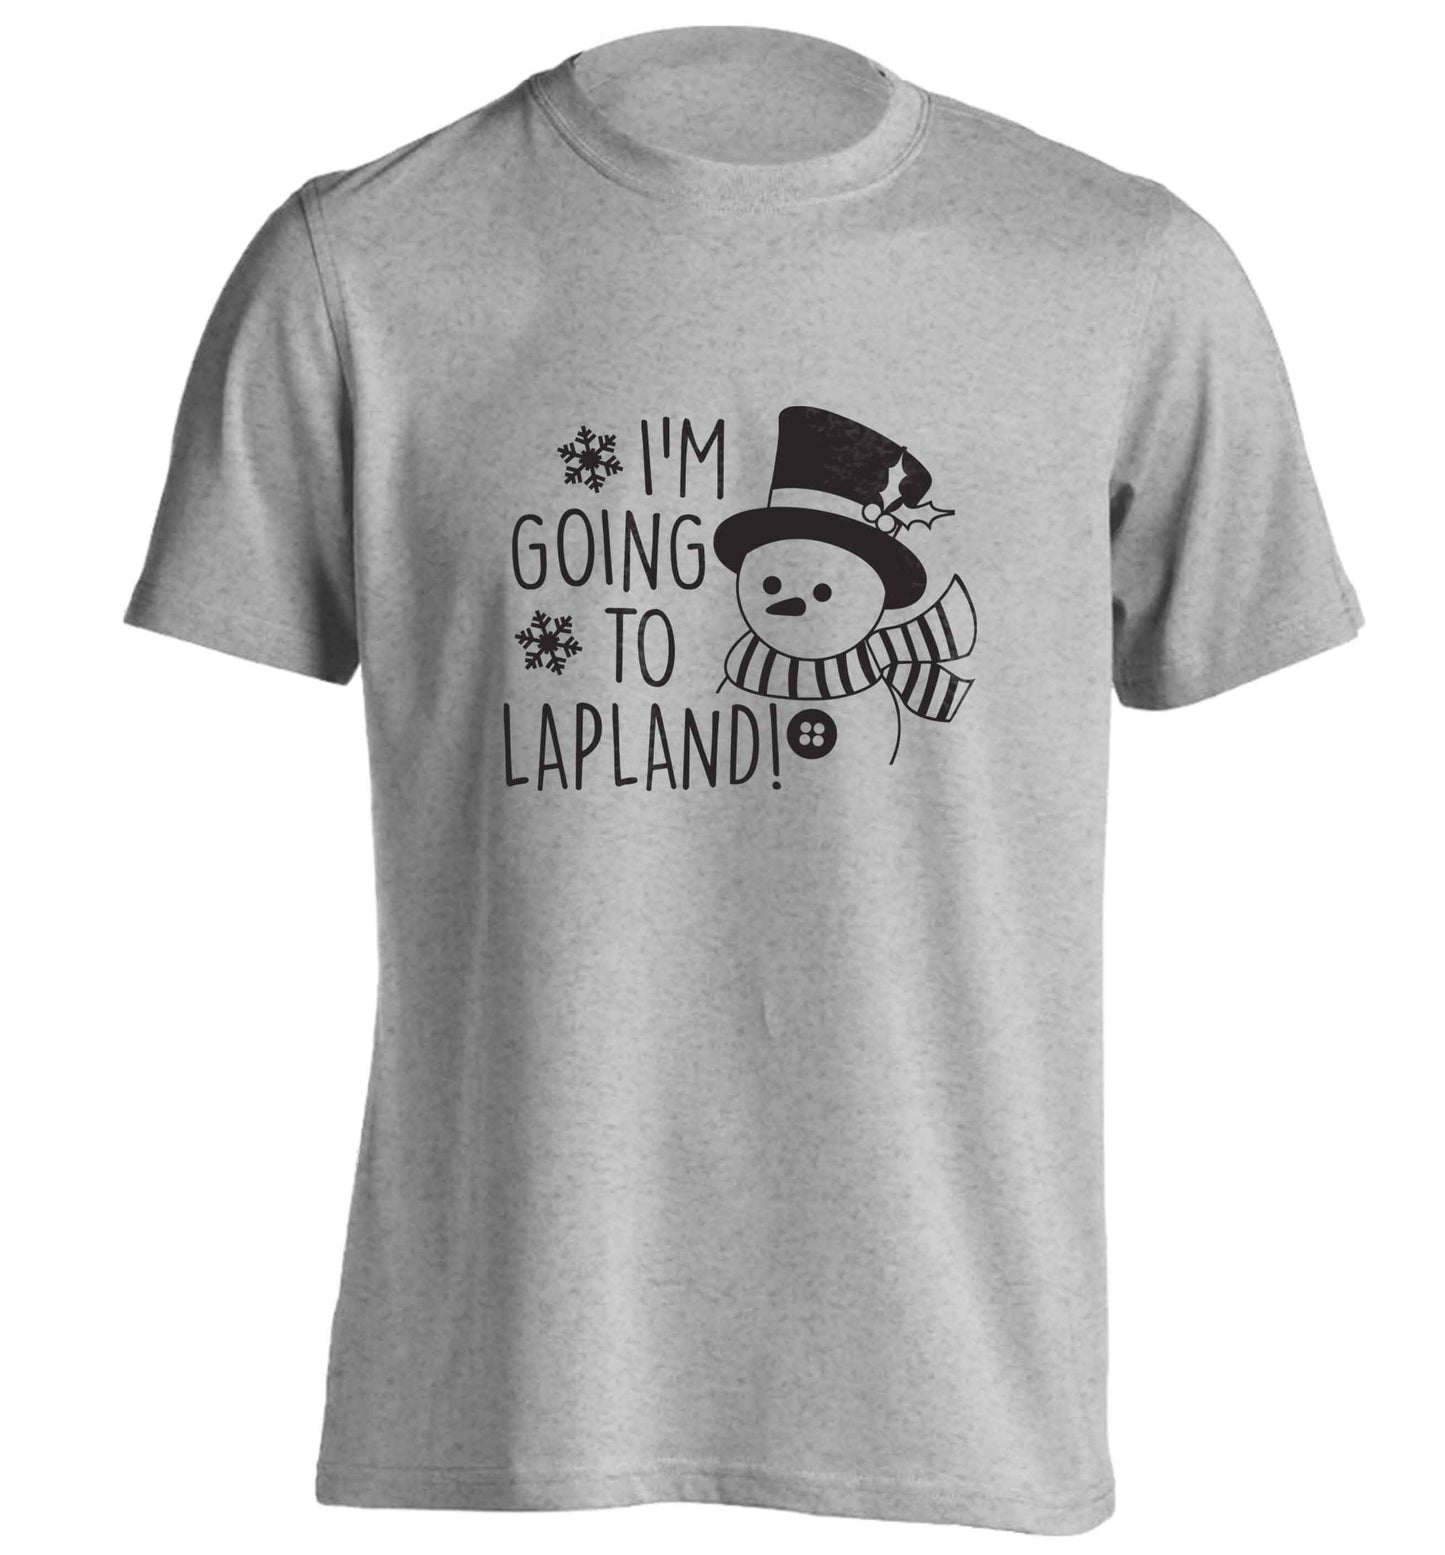 I'm going to Lapland adults unisex grey Tshirt 2XL